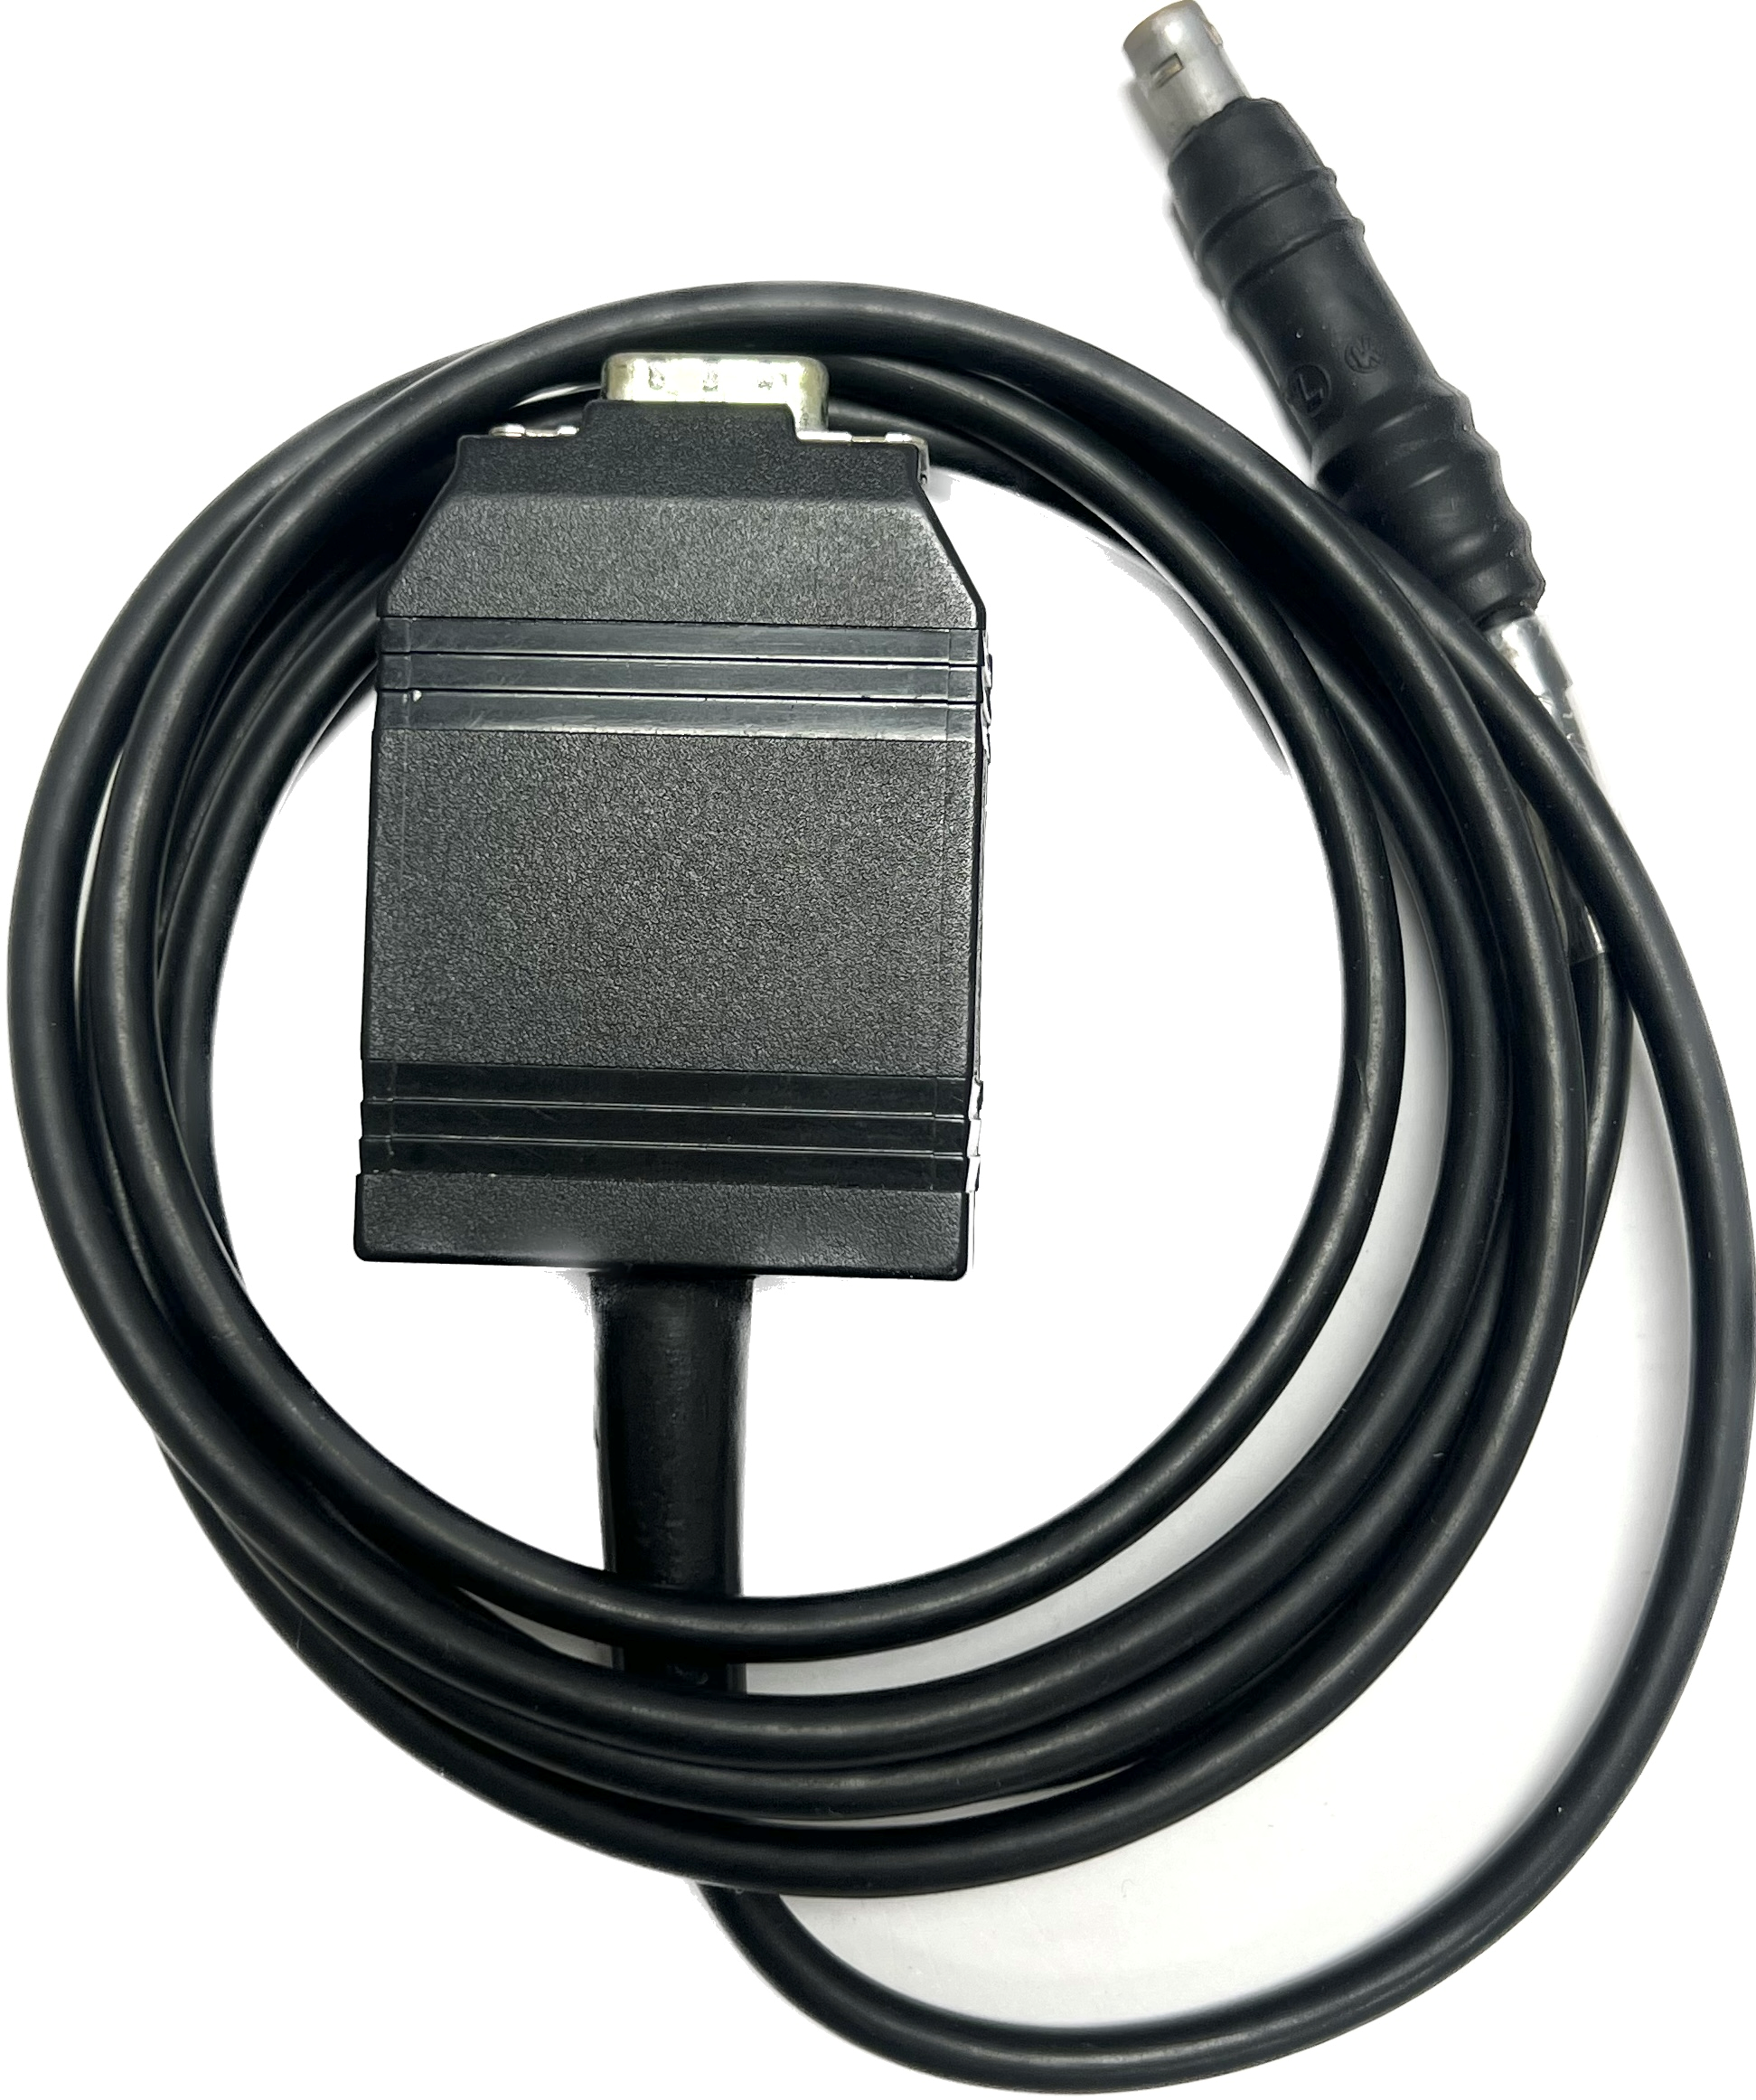 Krautkramer Branson PCCBL-841 9 Pin Serial Cable